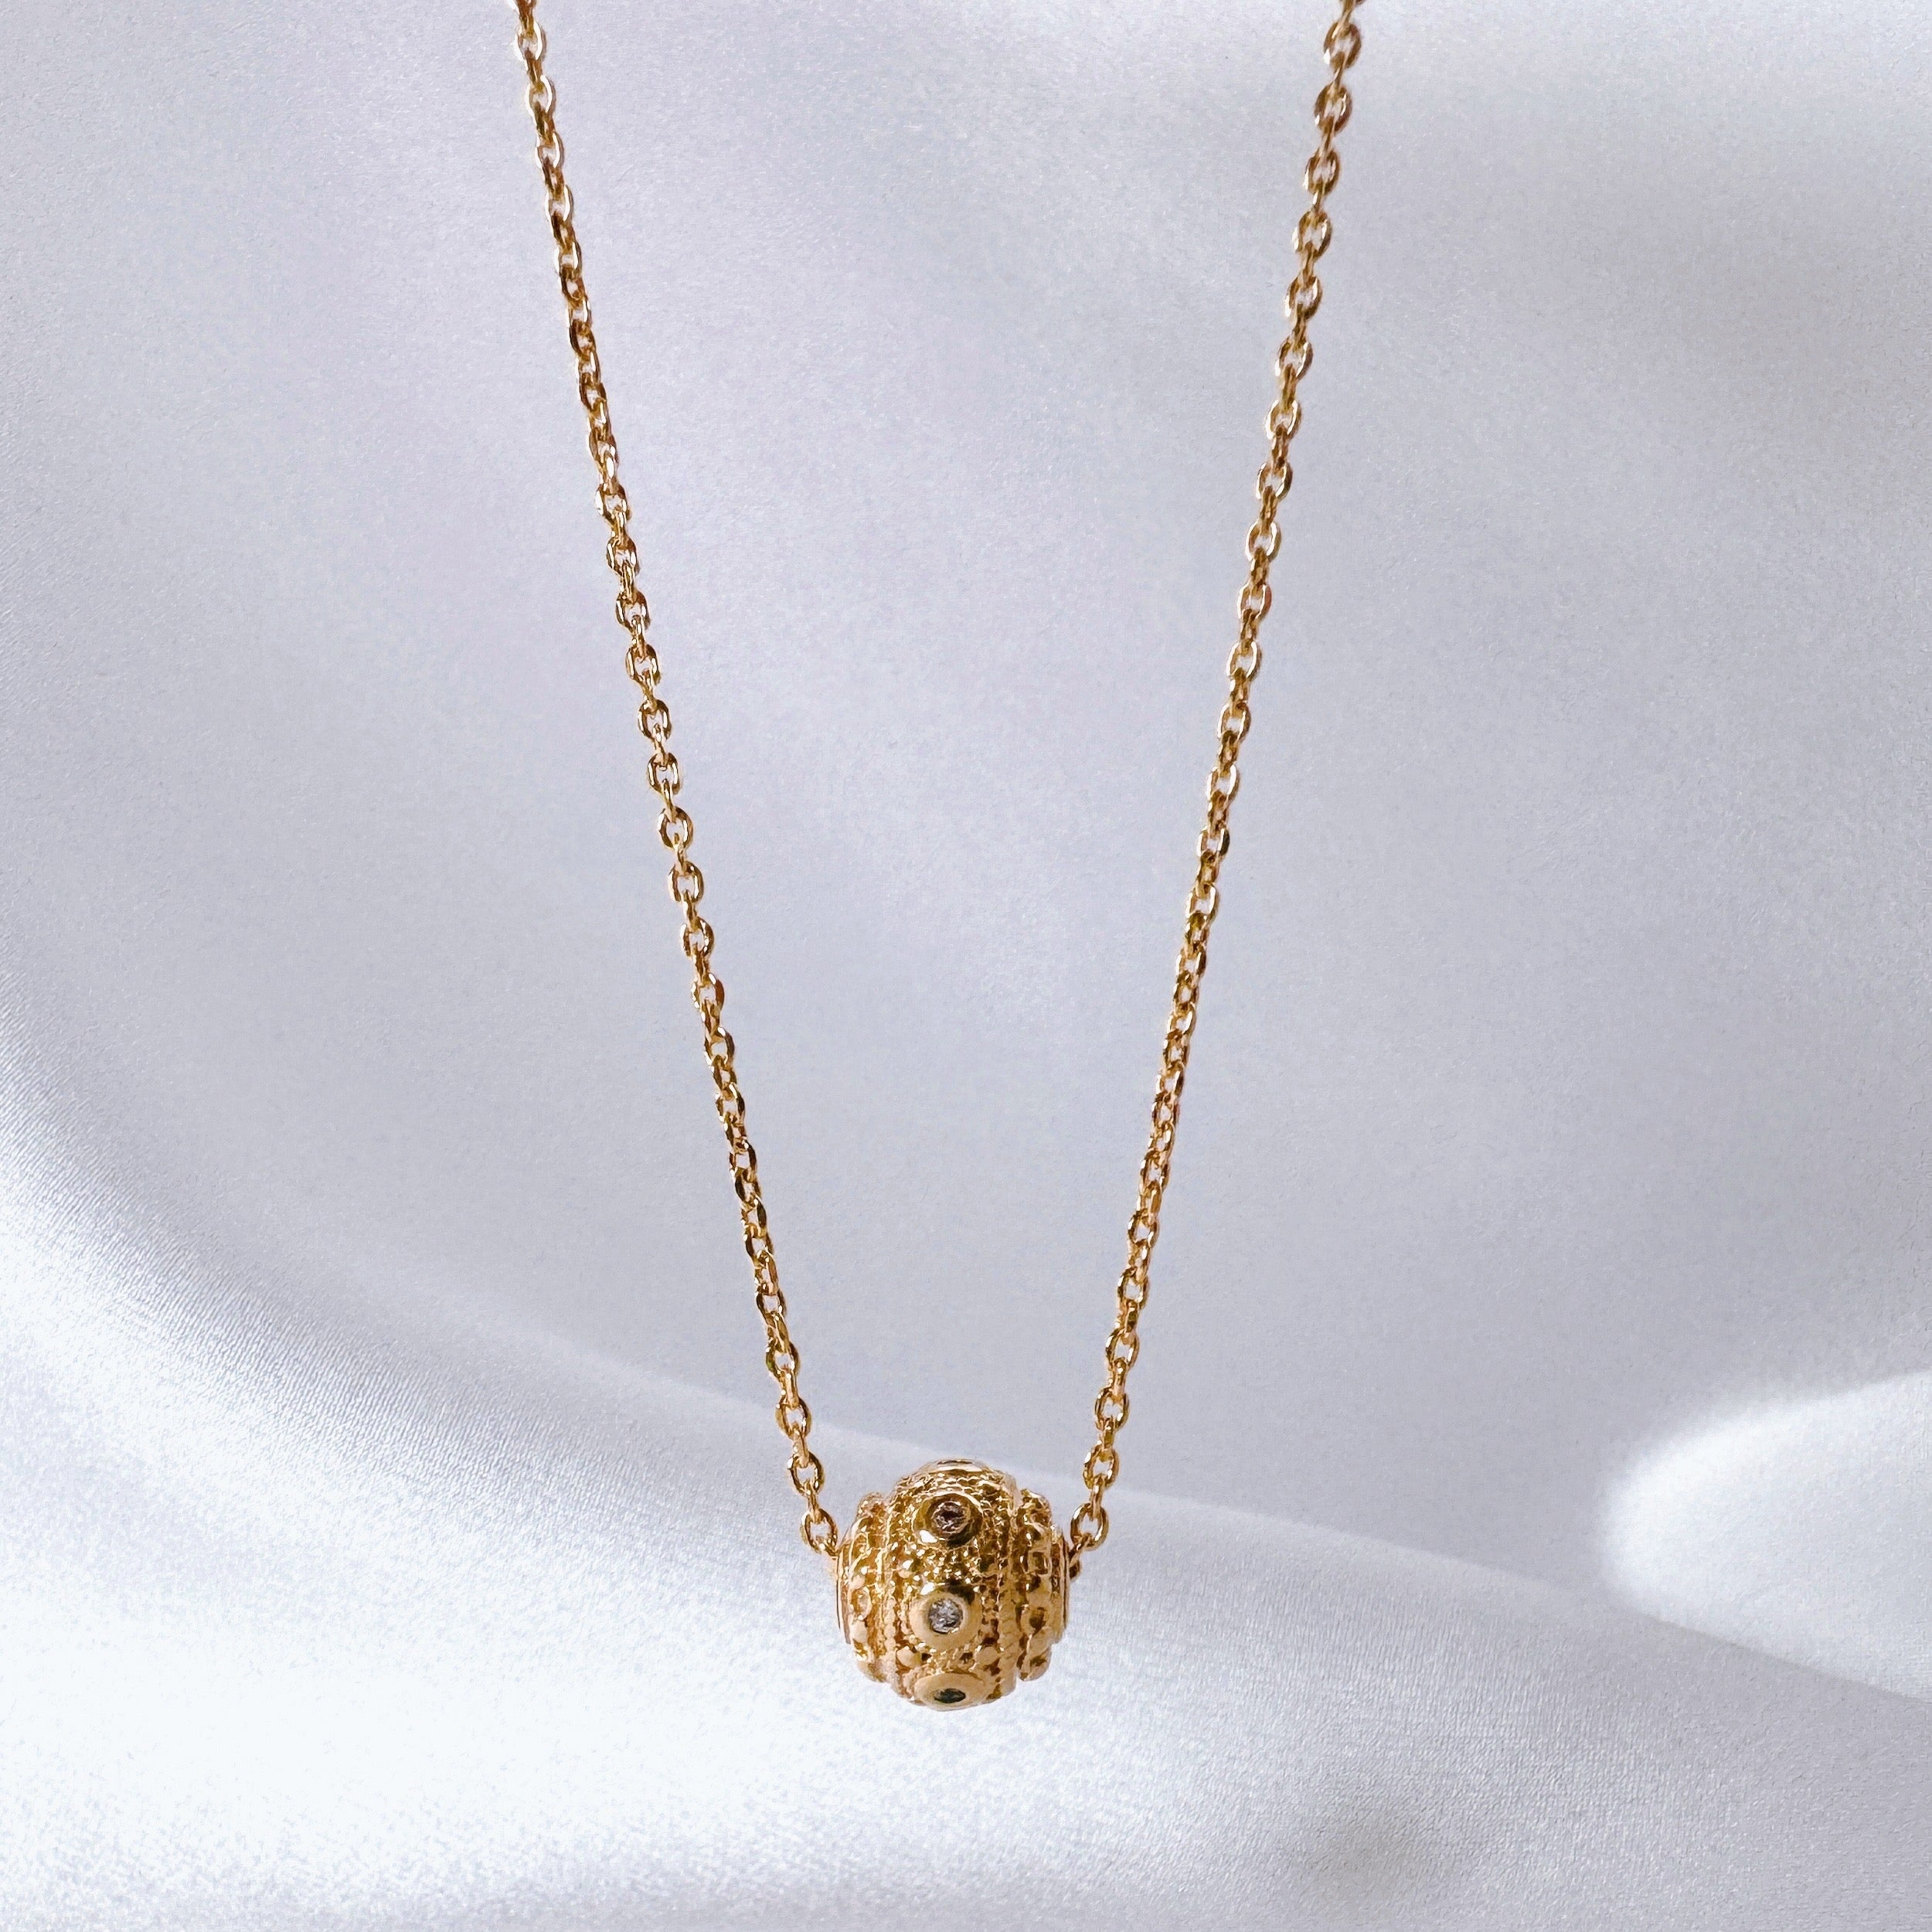 Gold-plated “Amaya” necklace